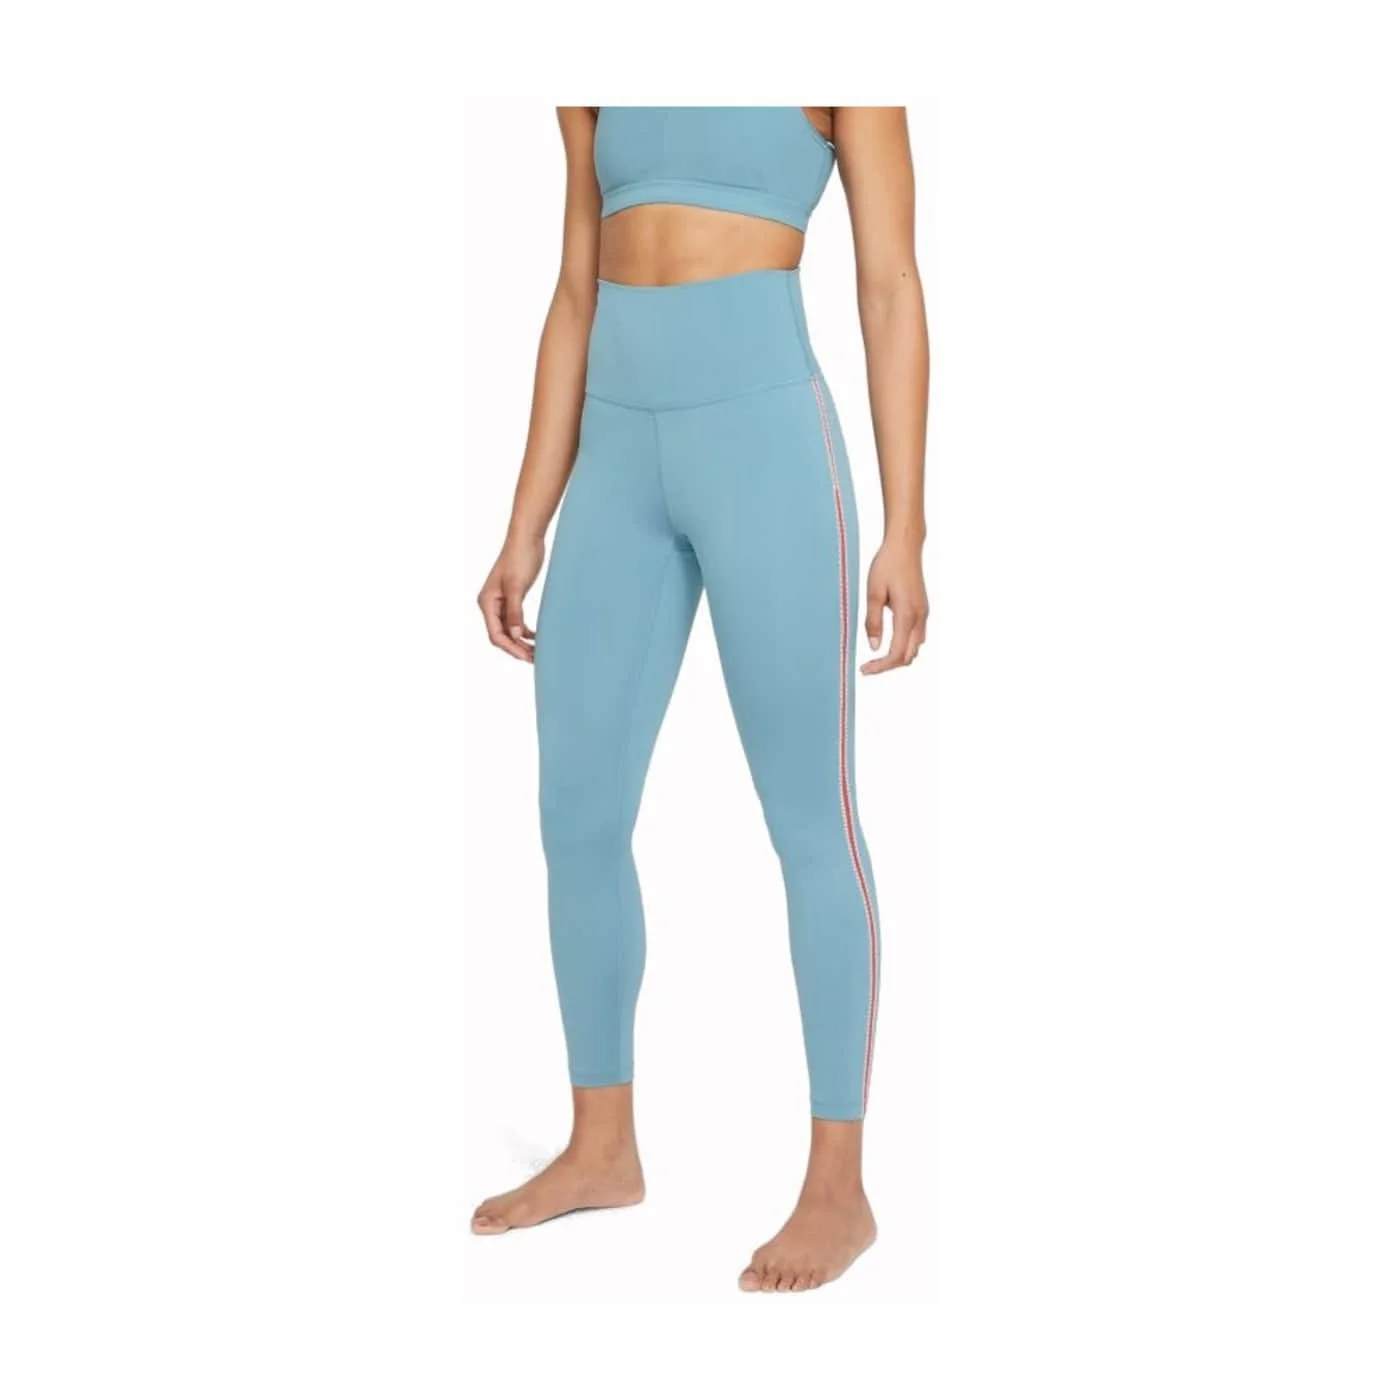 Nike Yoga Women's yoga leggings - Pants and tights - Clothes